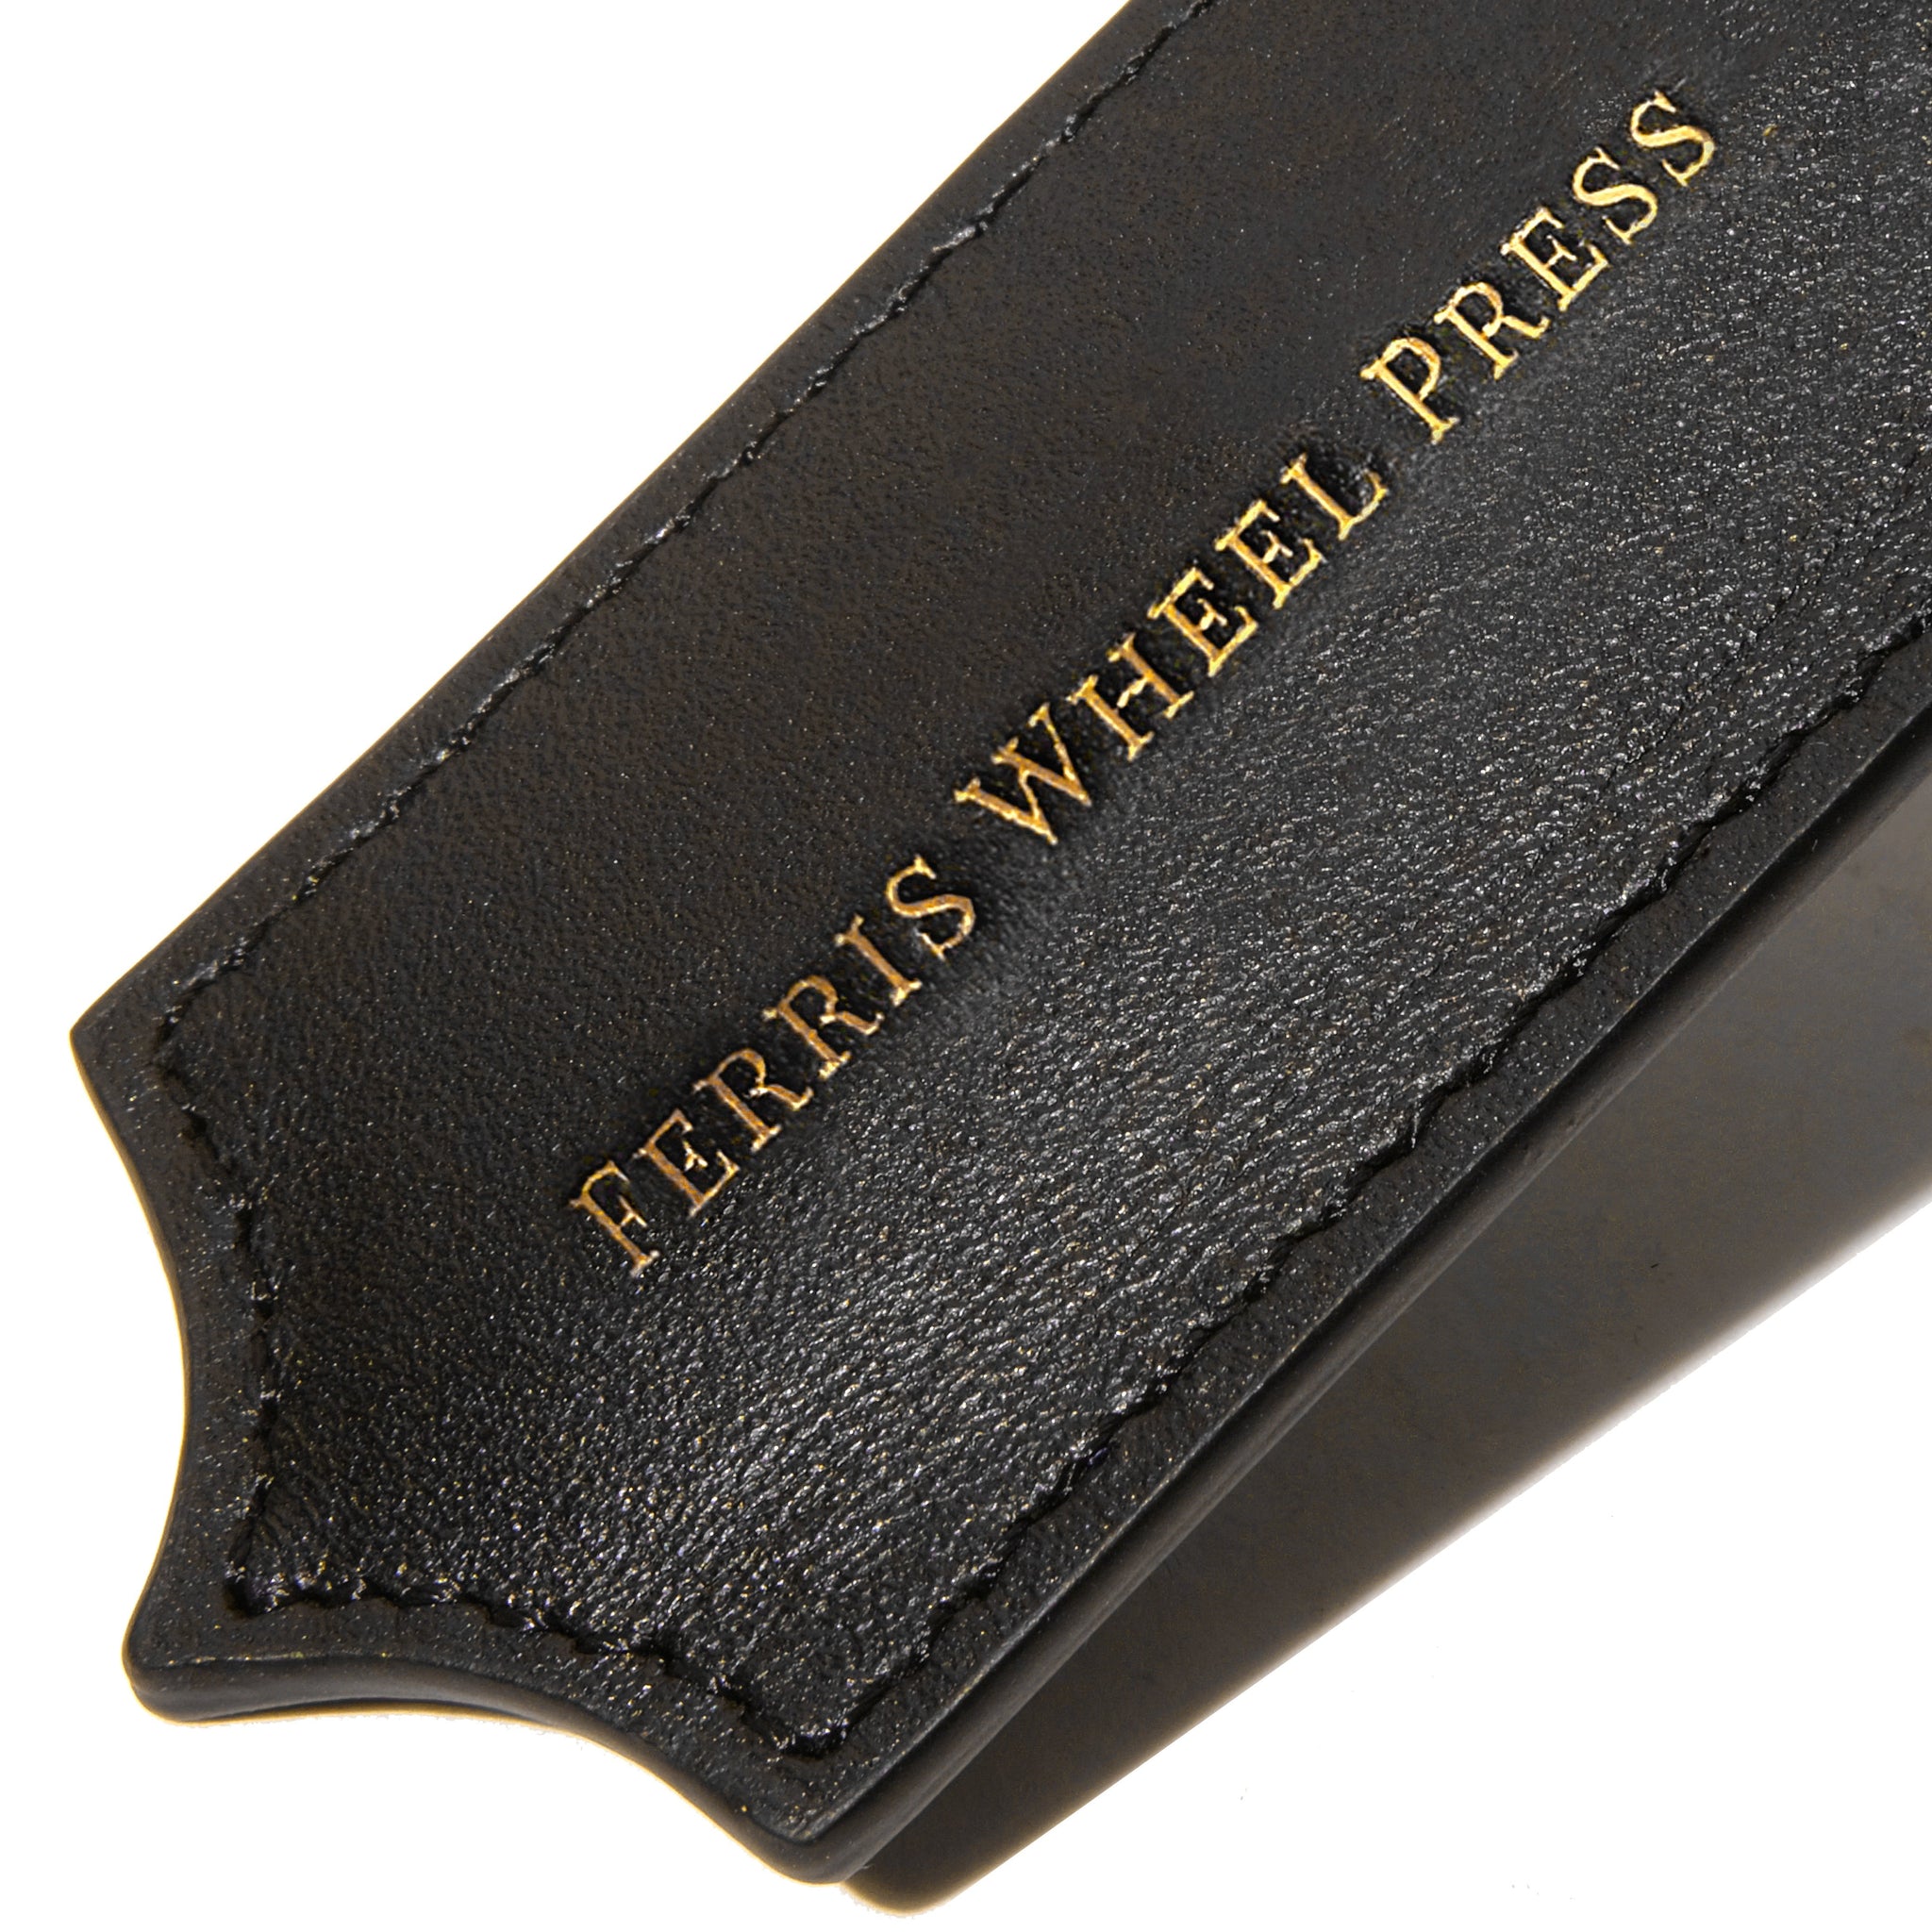 Ferris Wheel Press - The Joule Fountain Pen (Engravers Teal)